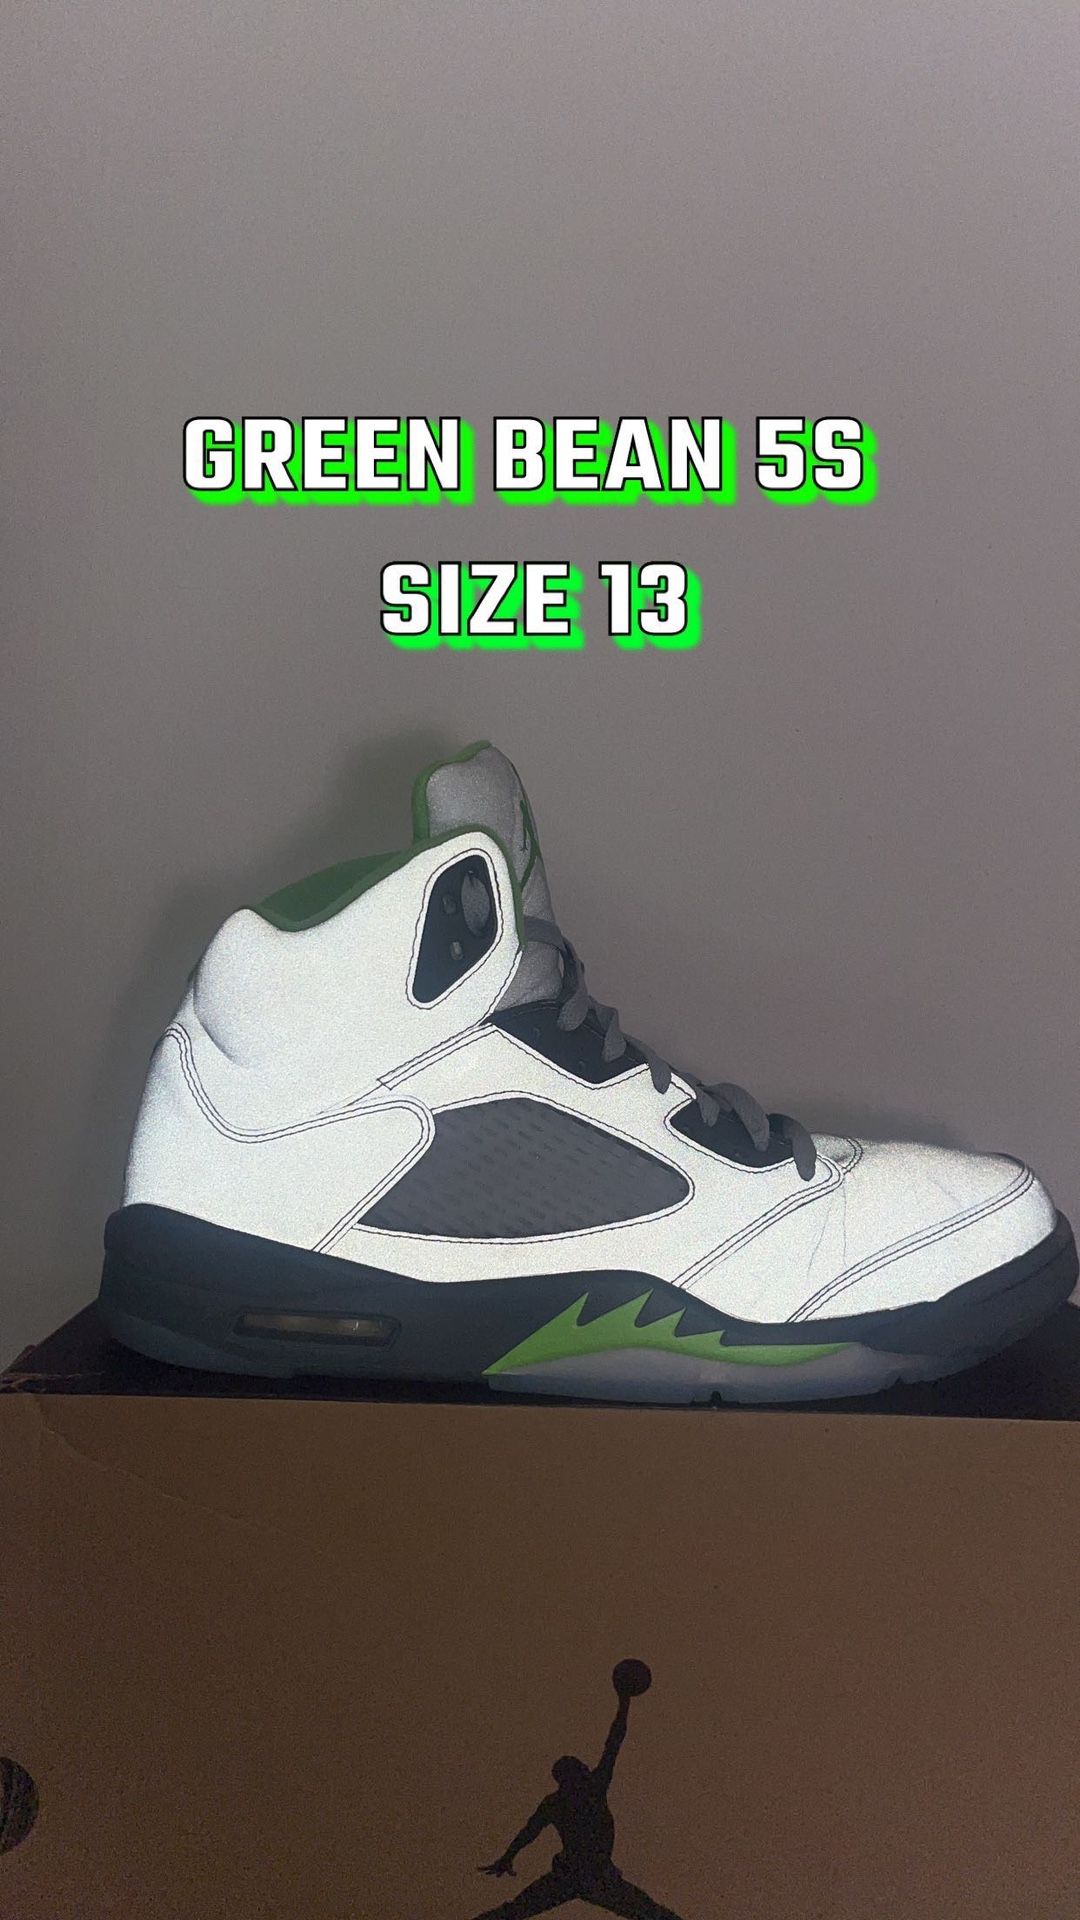 Jordan Green Bean 5s 